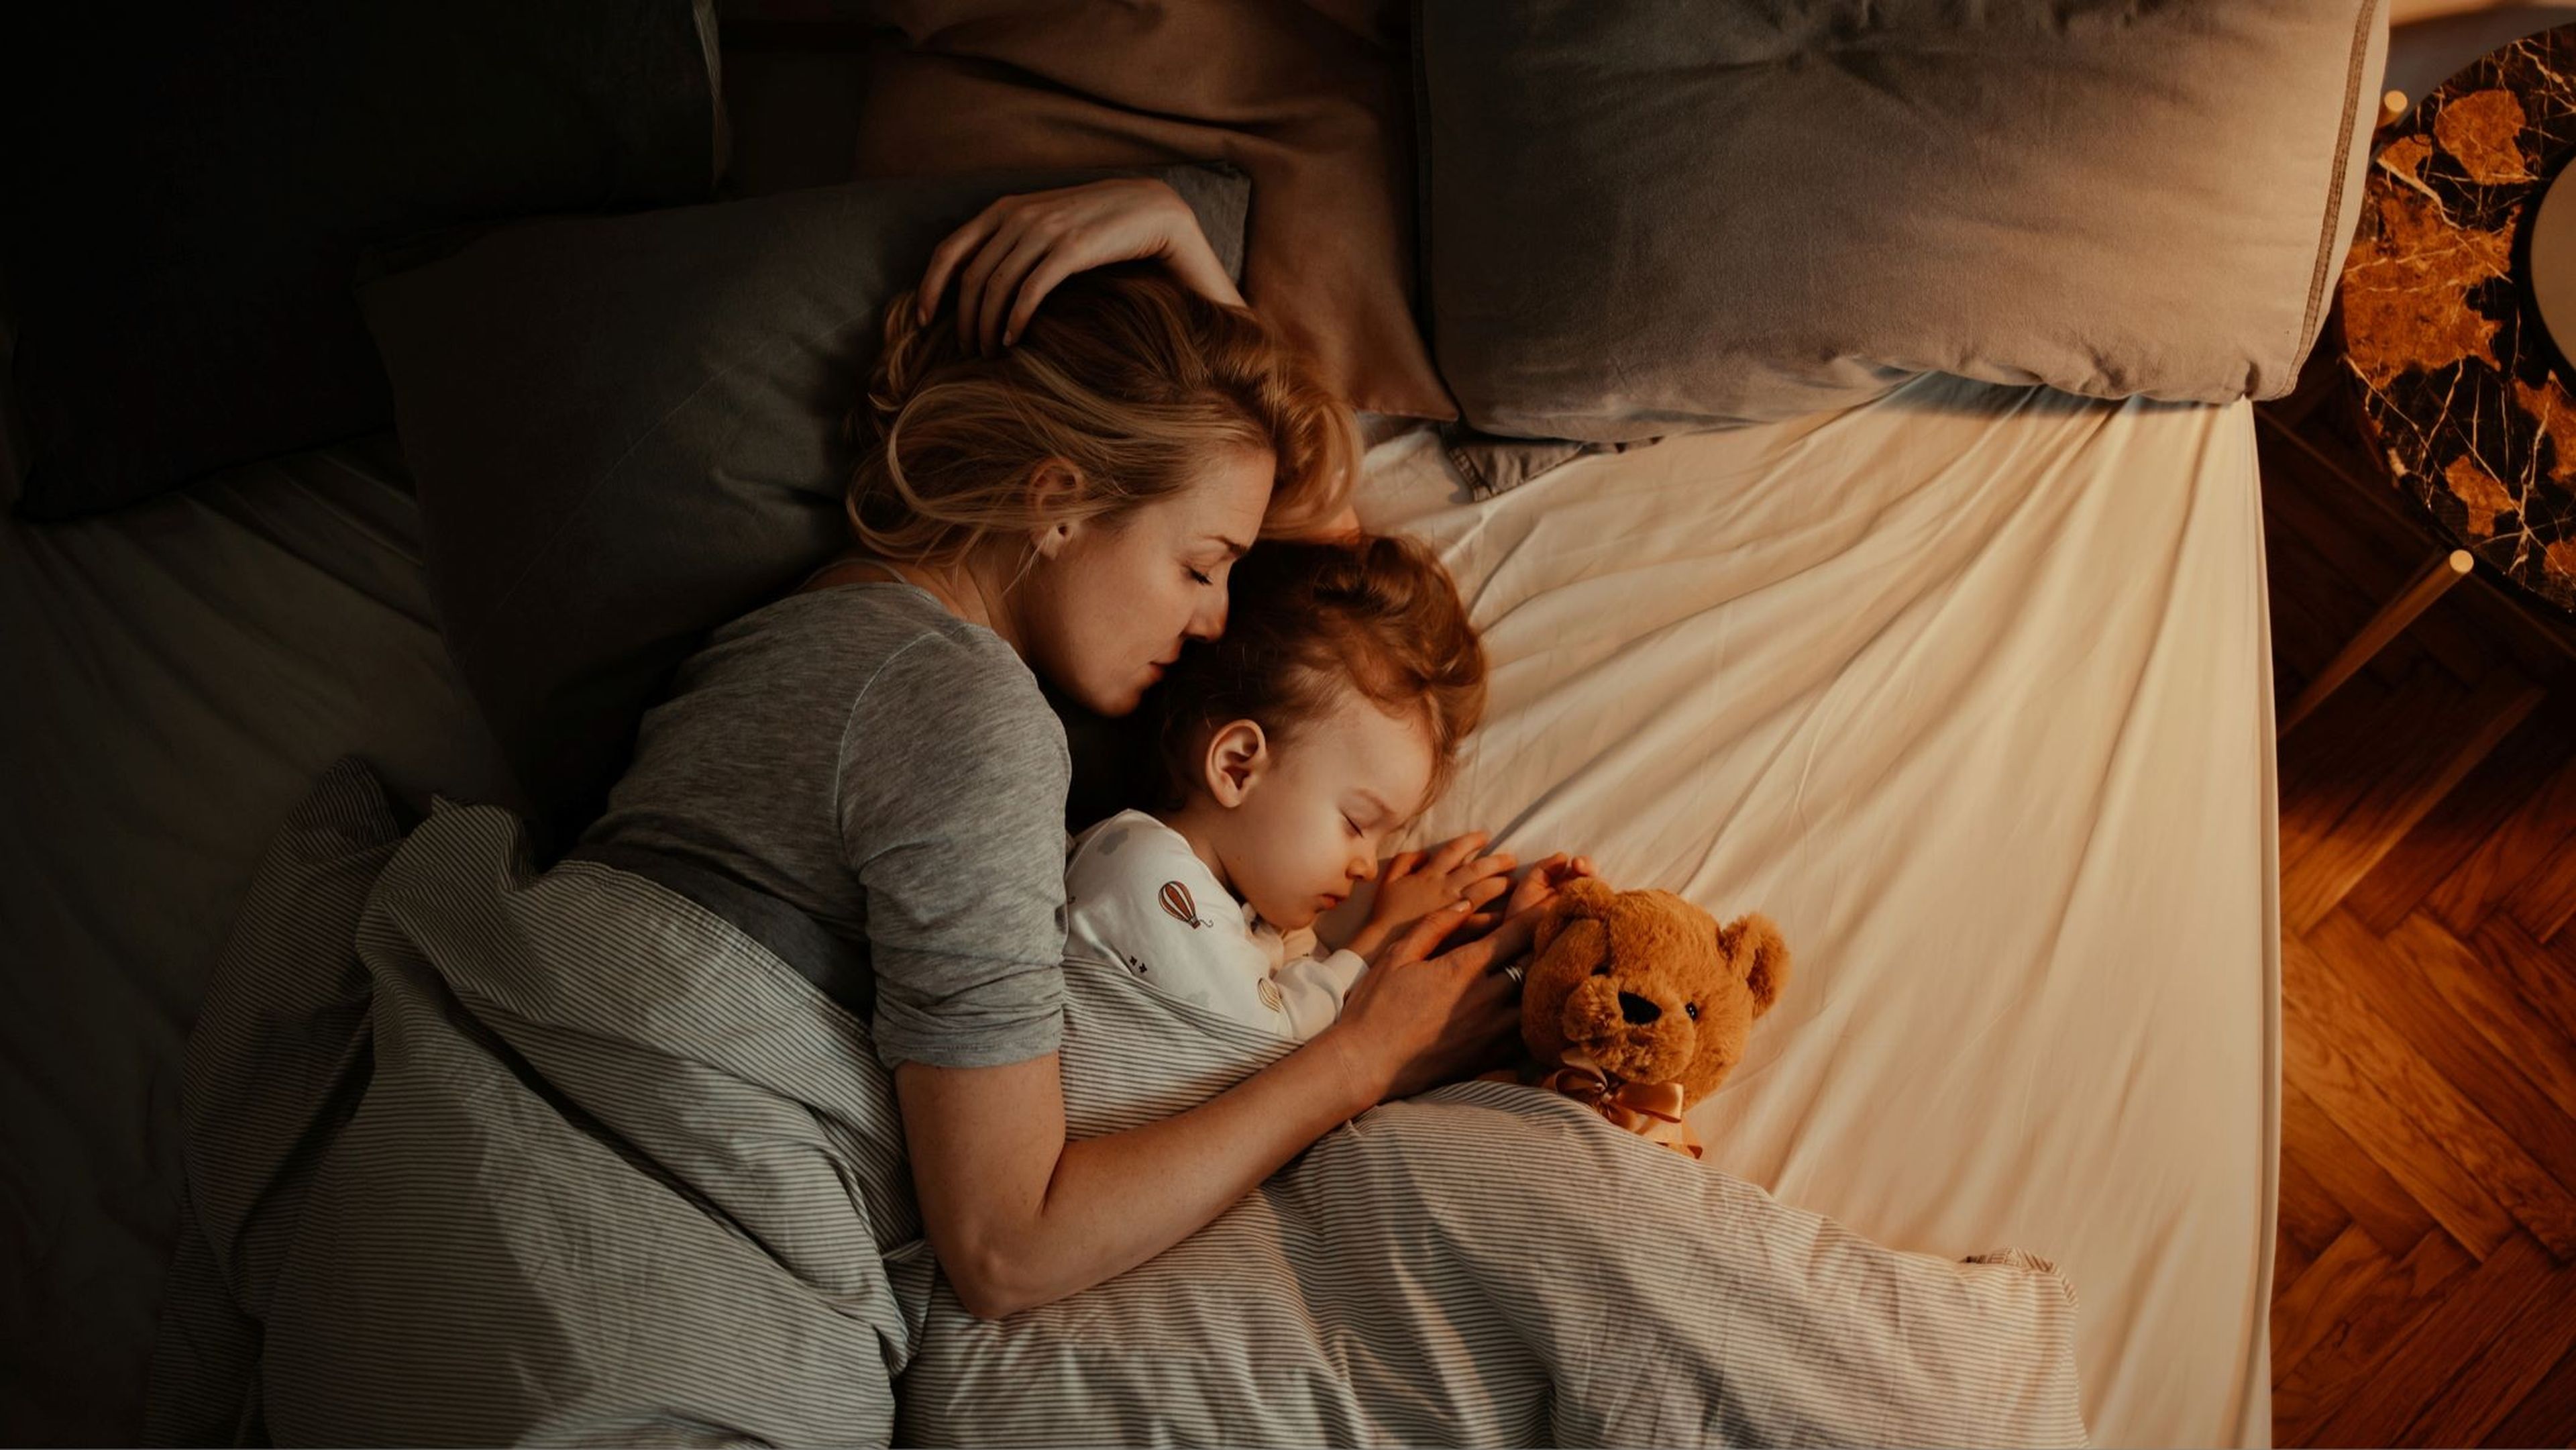 Madre e hija duermen en la cama con un oso de peluche